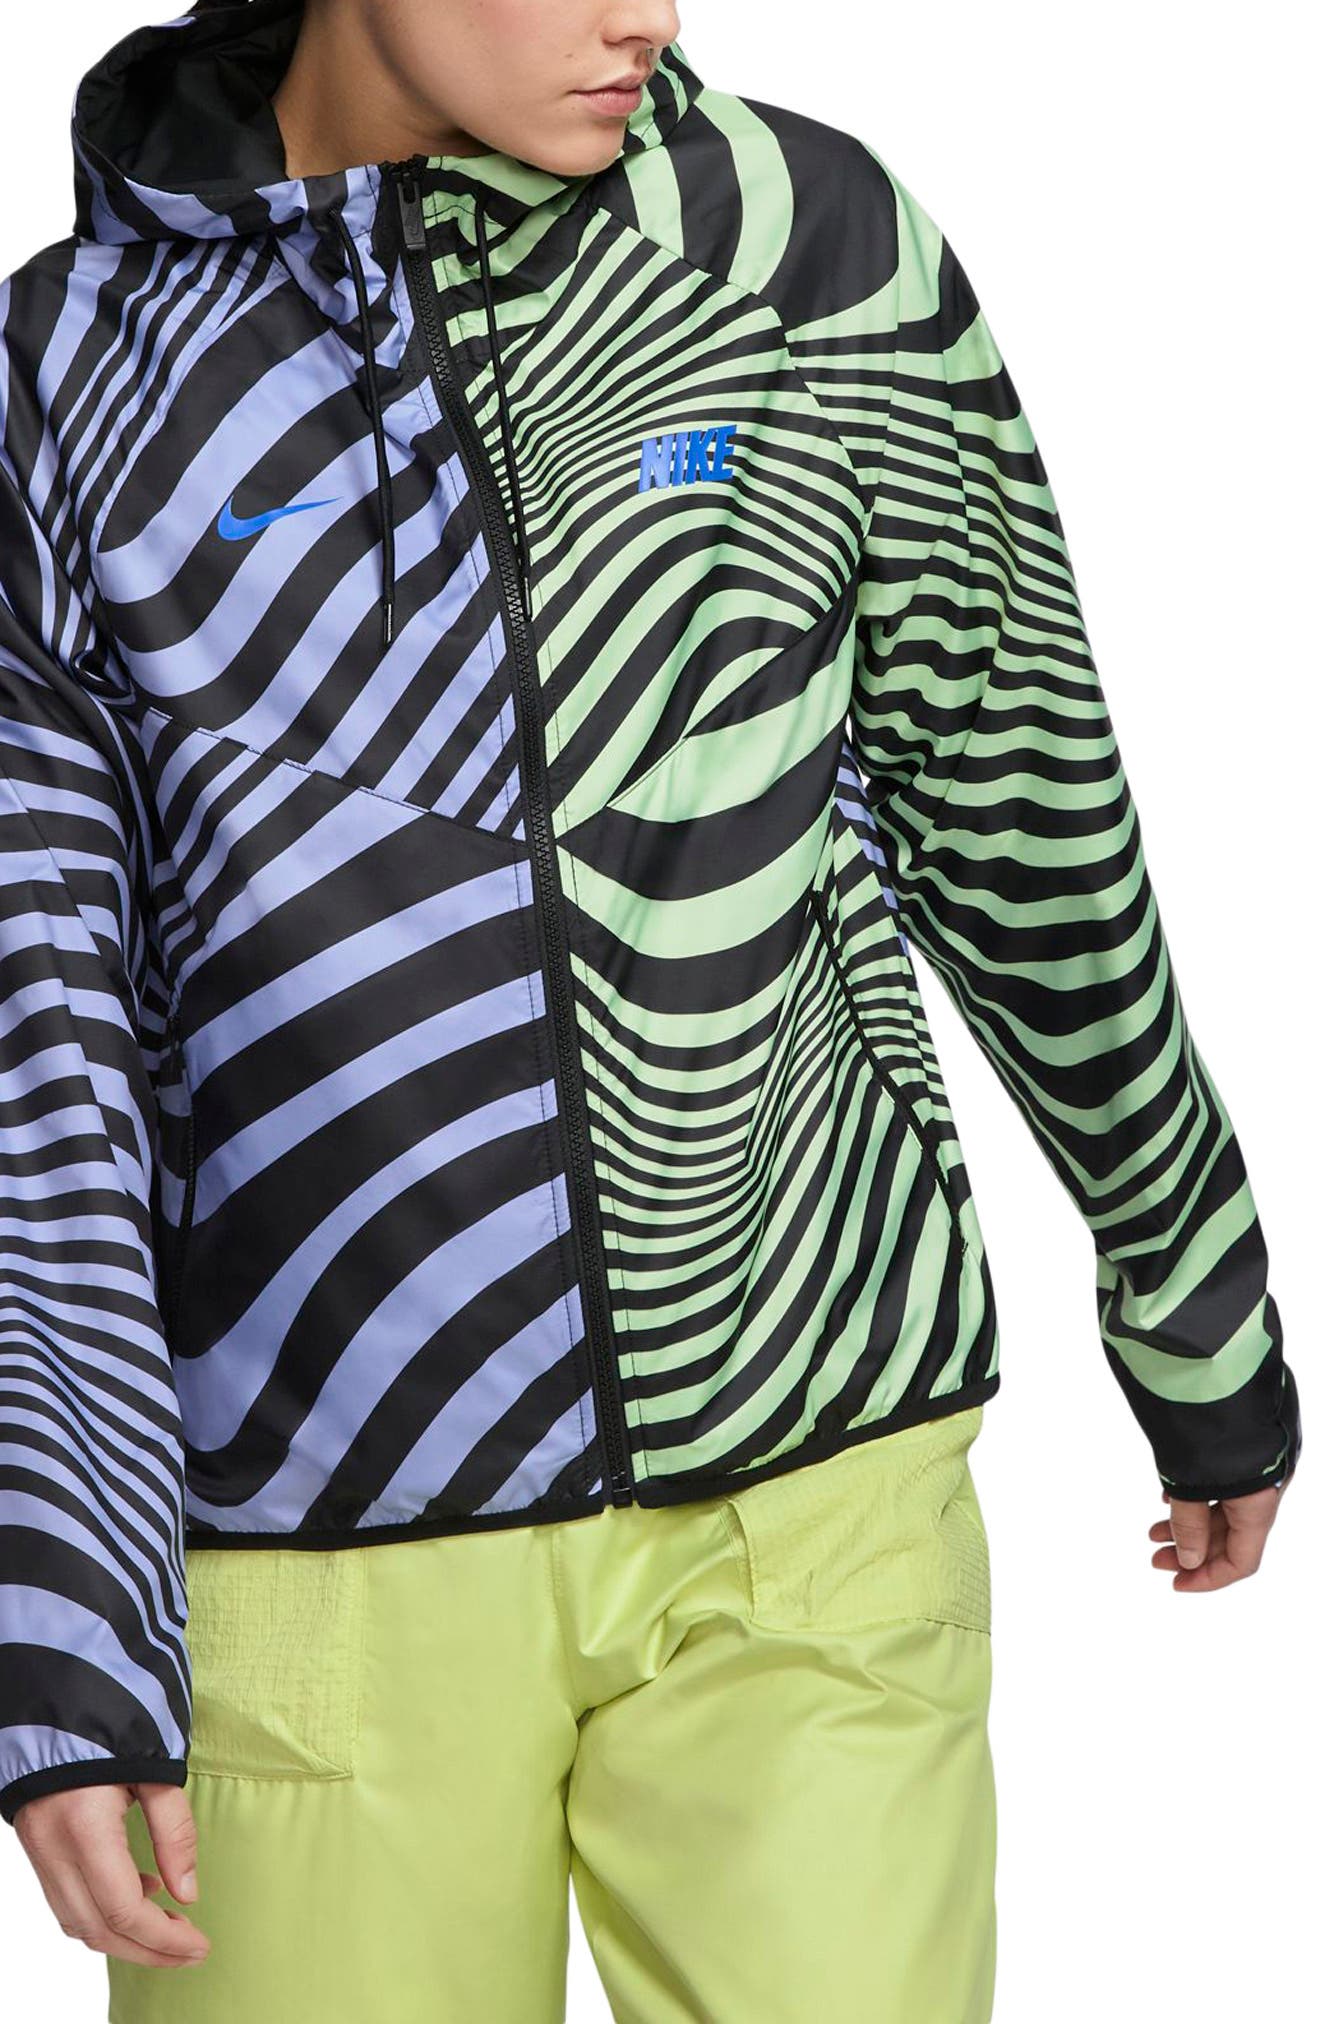 windrunner wind & water repellent hooded jacket